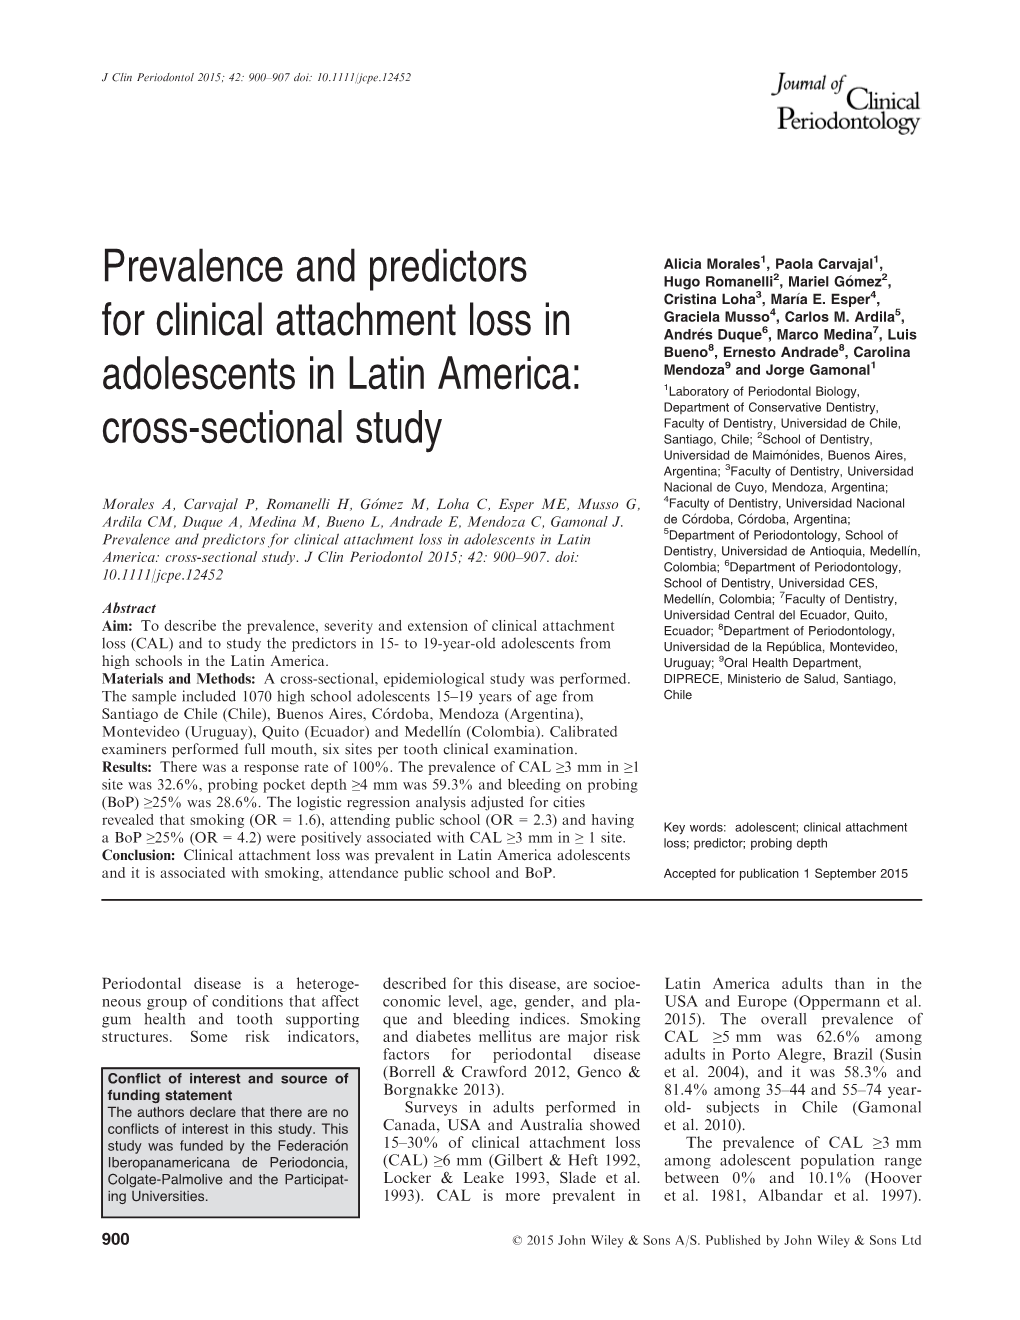 Prevalence and Predictors for Clinical Attachment Loss in Adolescents In